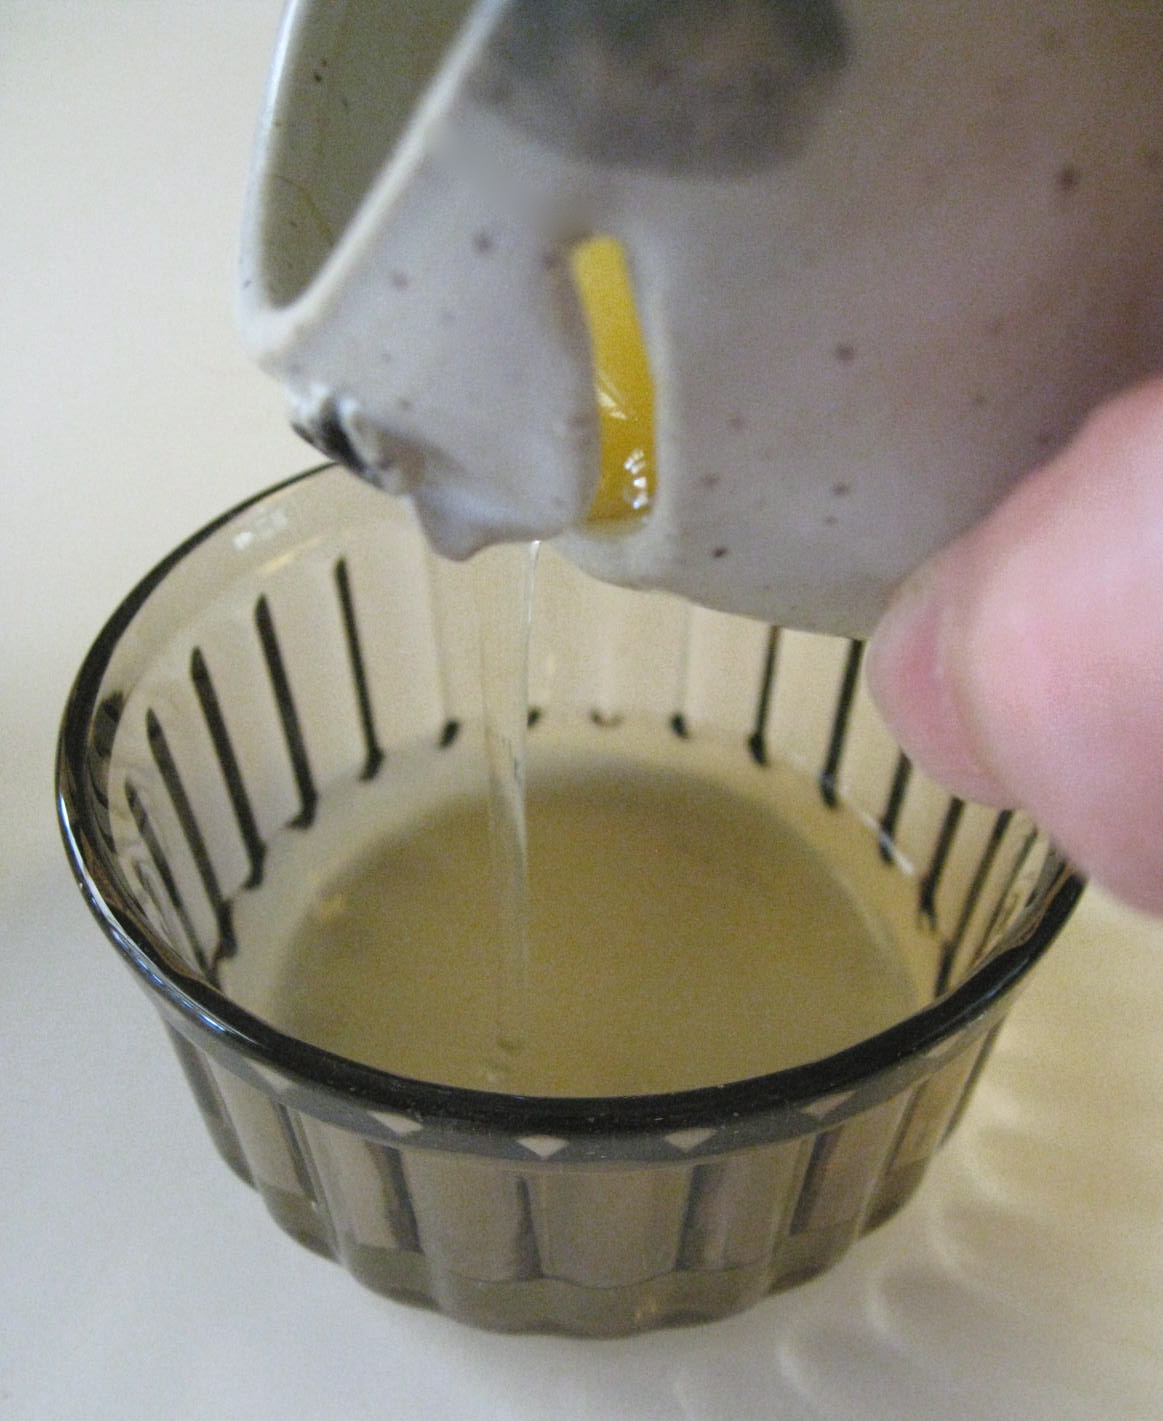 Separate Egg Yolk